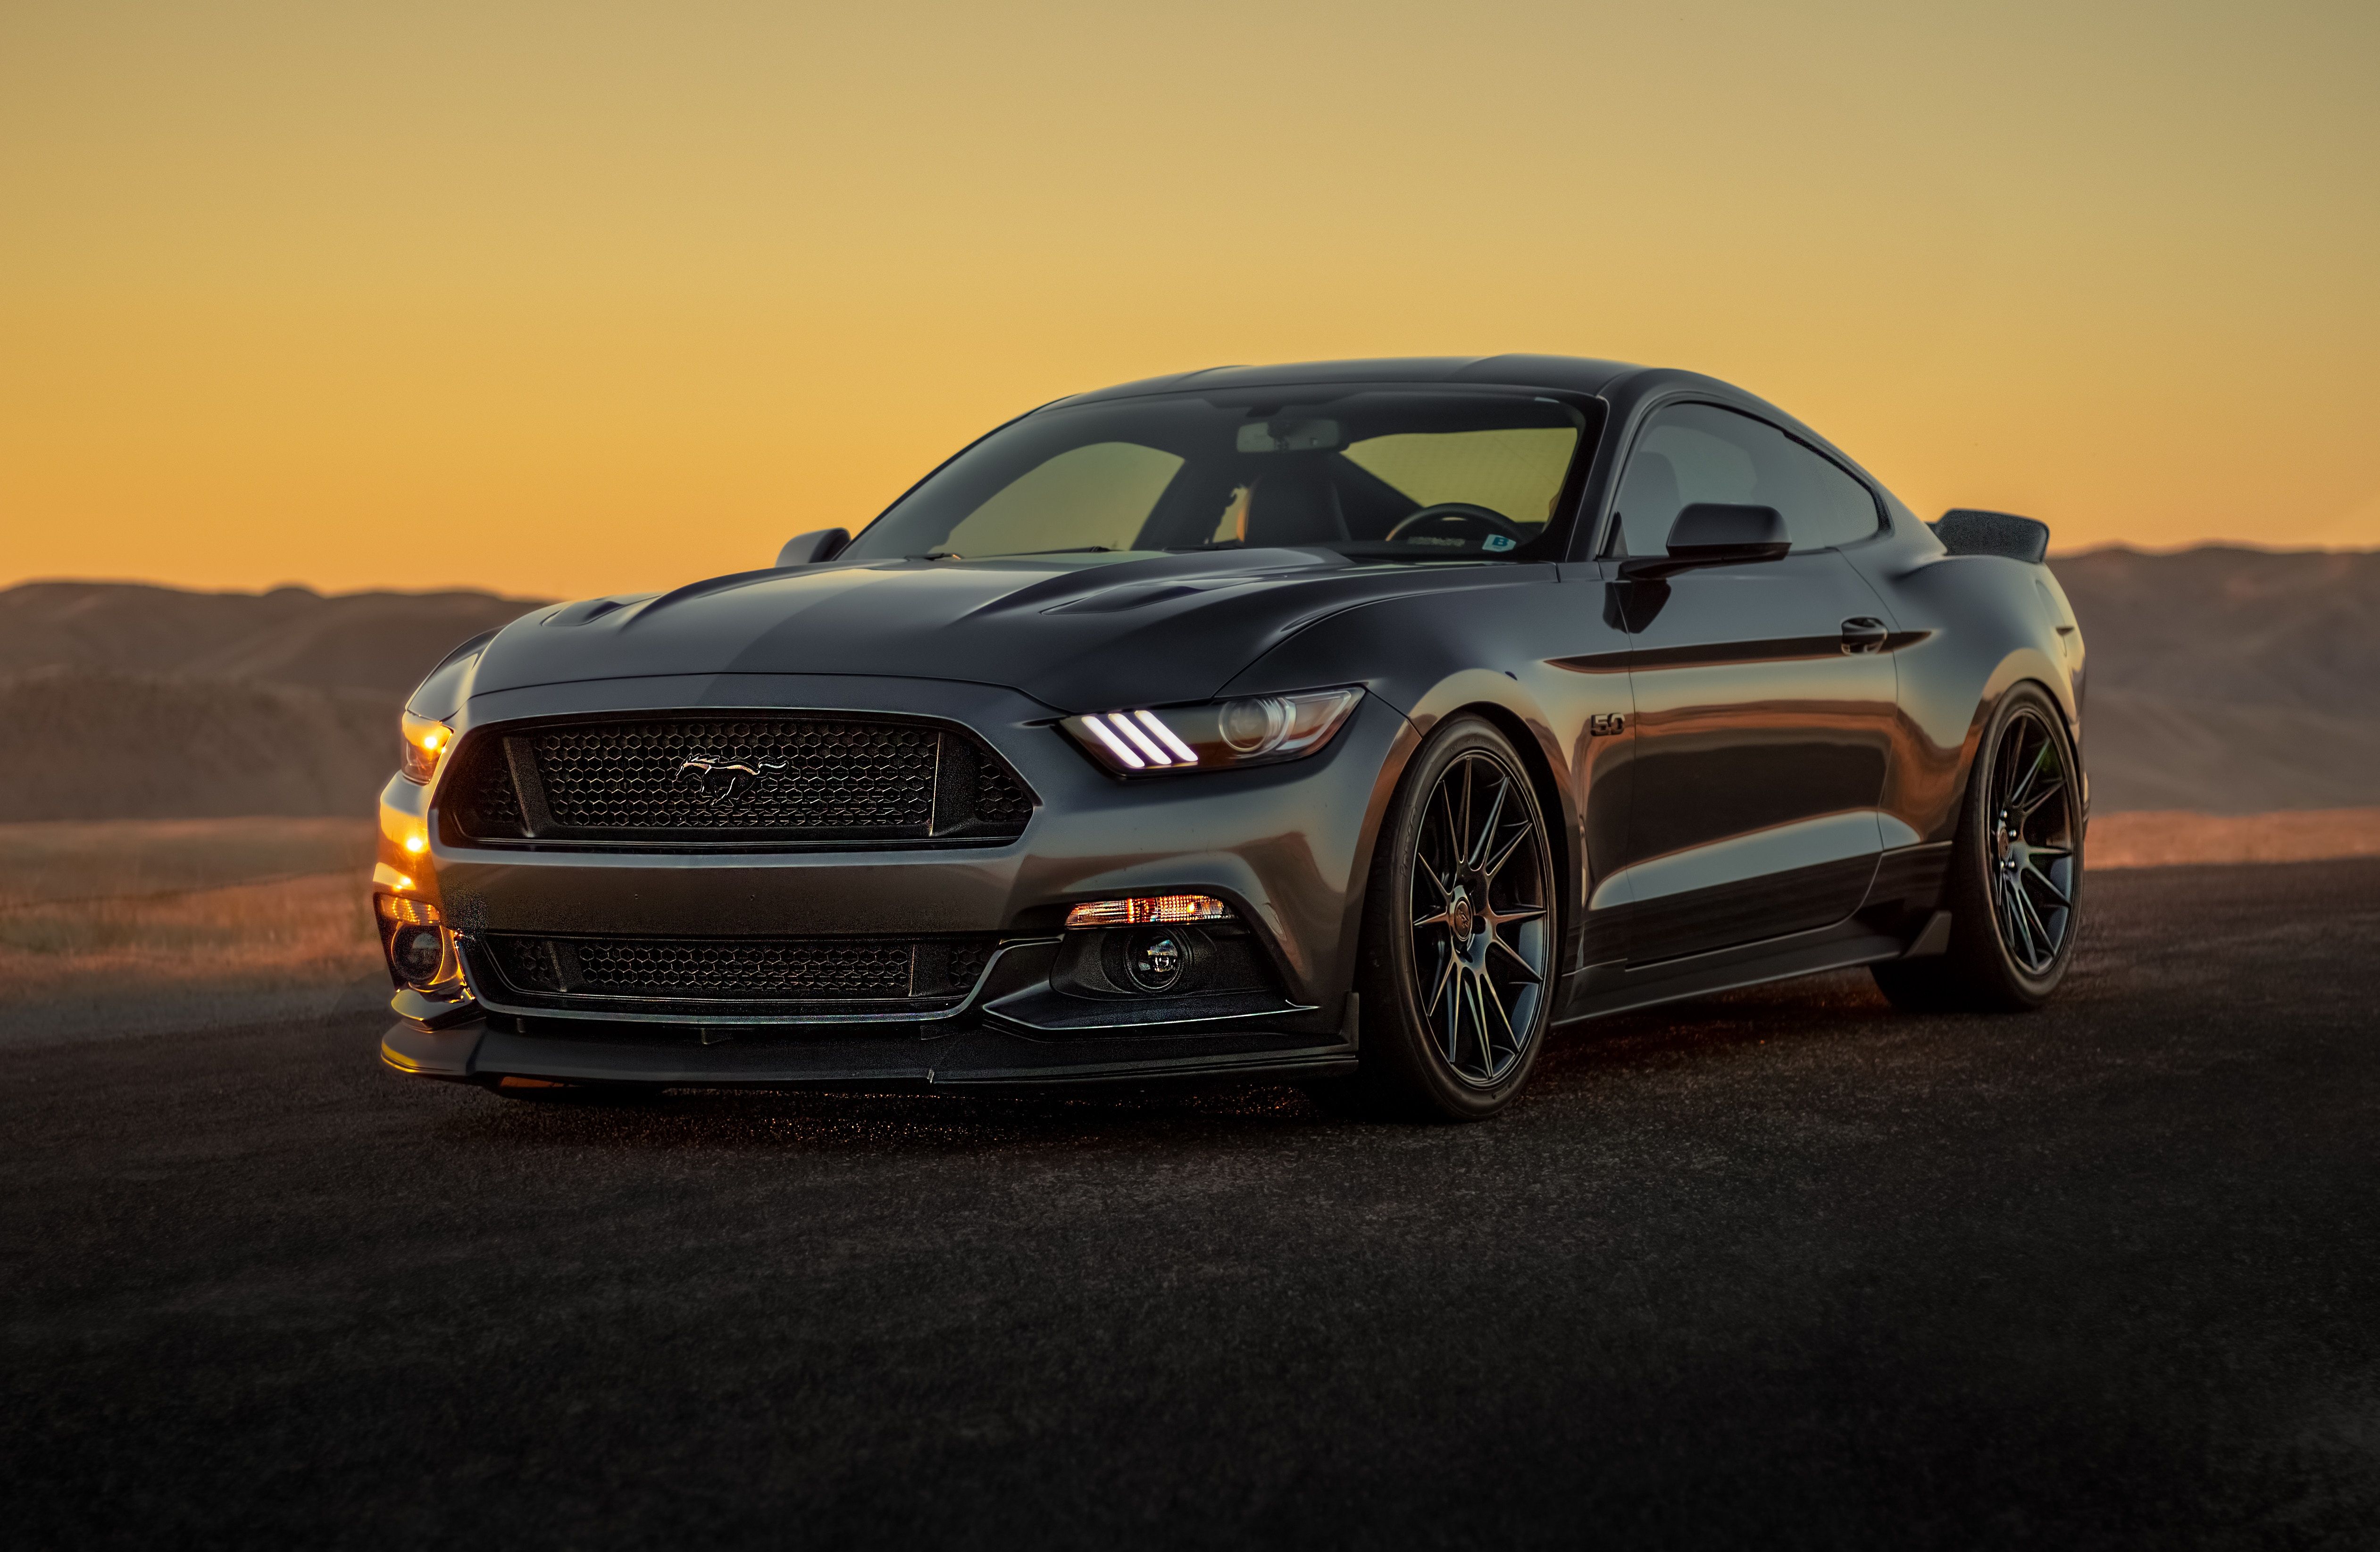 Black Ford Mustang 2019 5k, HD Cars, 4k Wallpaper, Image